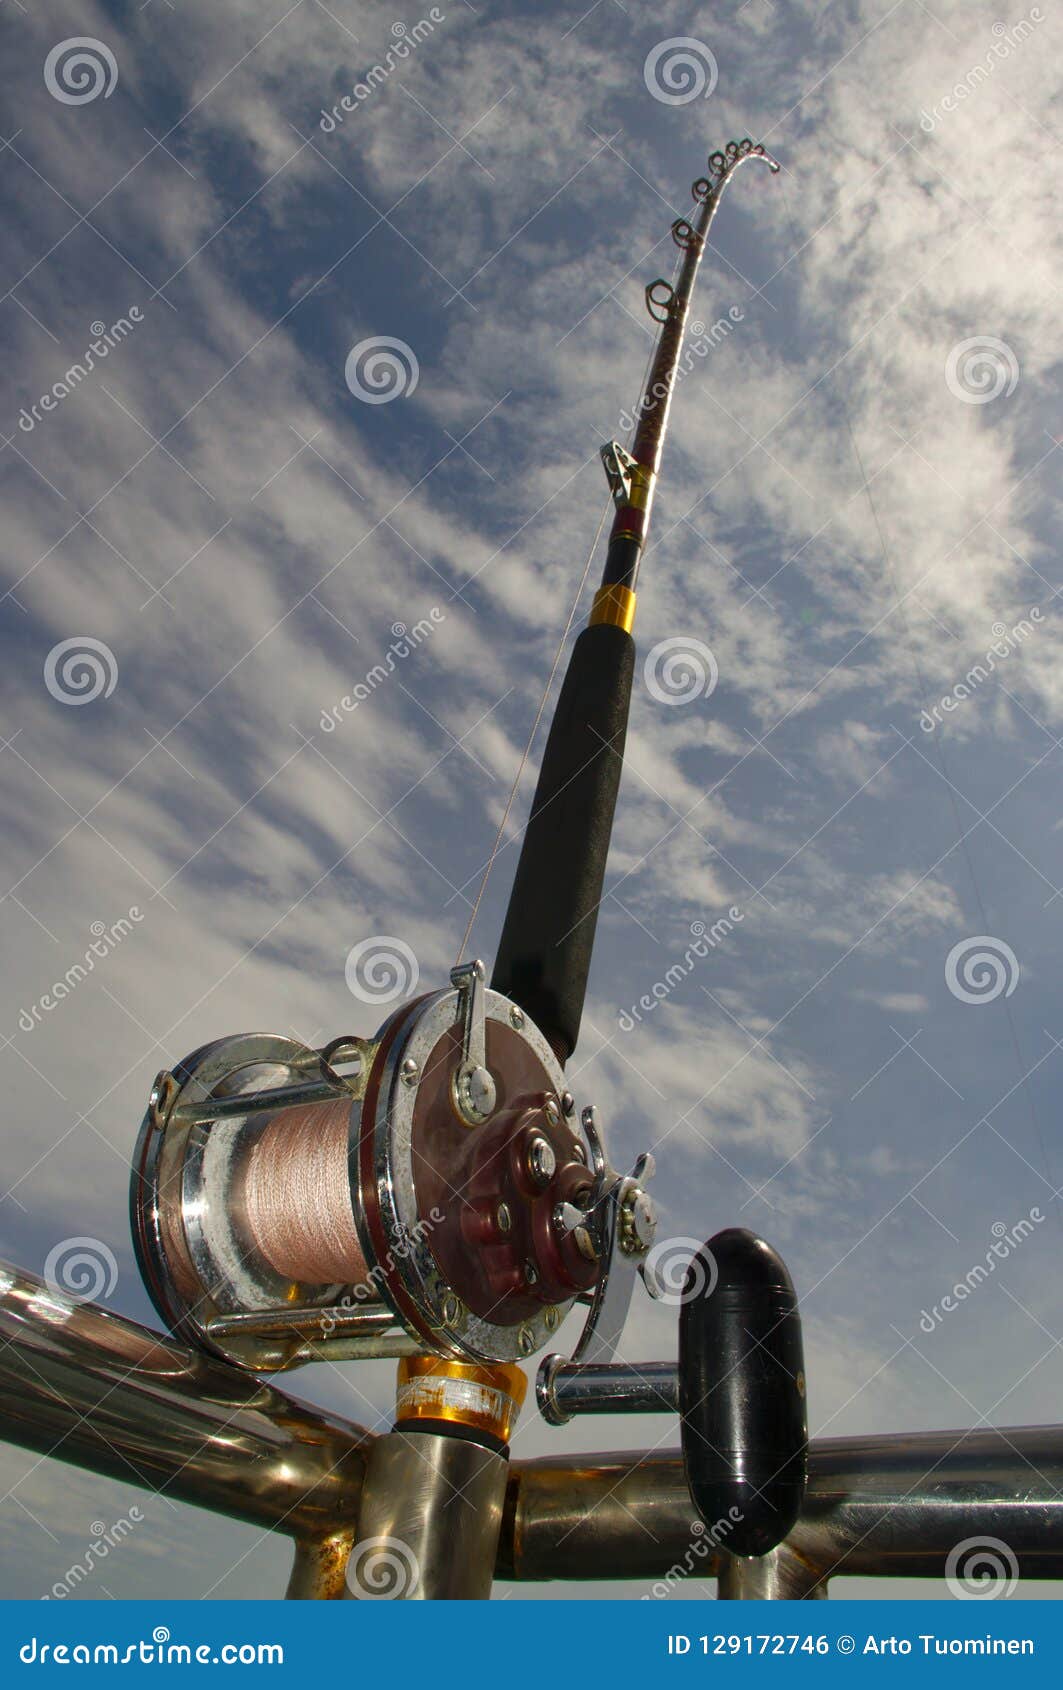 https://thumbs.dreamstime.com/z/fishing-rod-back-boat-heavy-fishing-equipment-boat-picture-fishing-pole-rod-holder-back-boat-nice-129172746.jpg